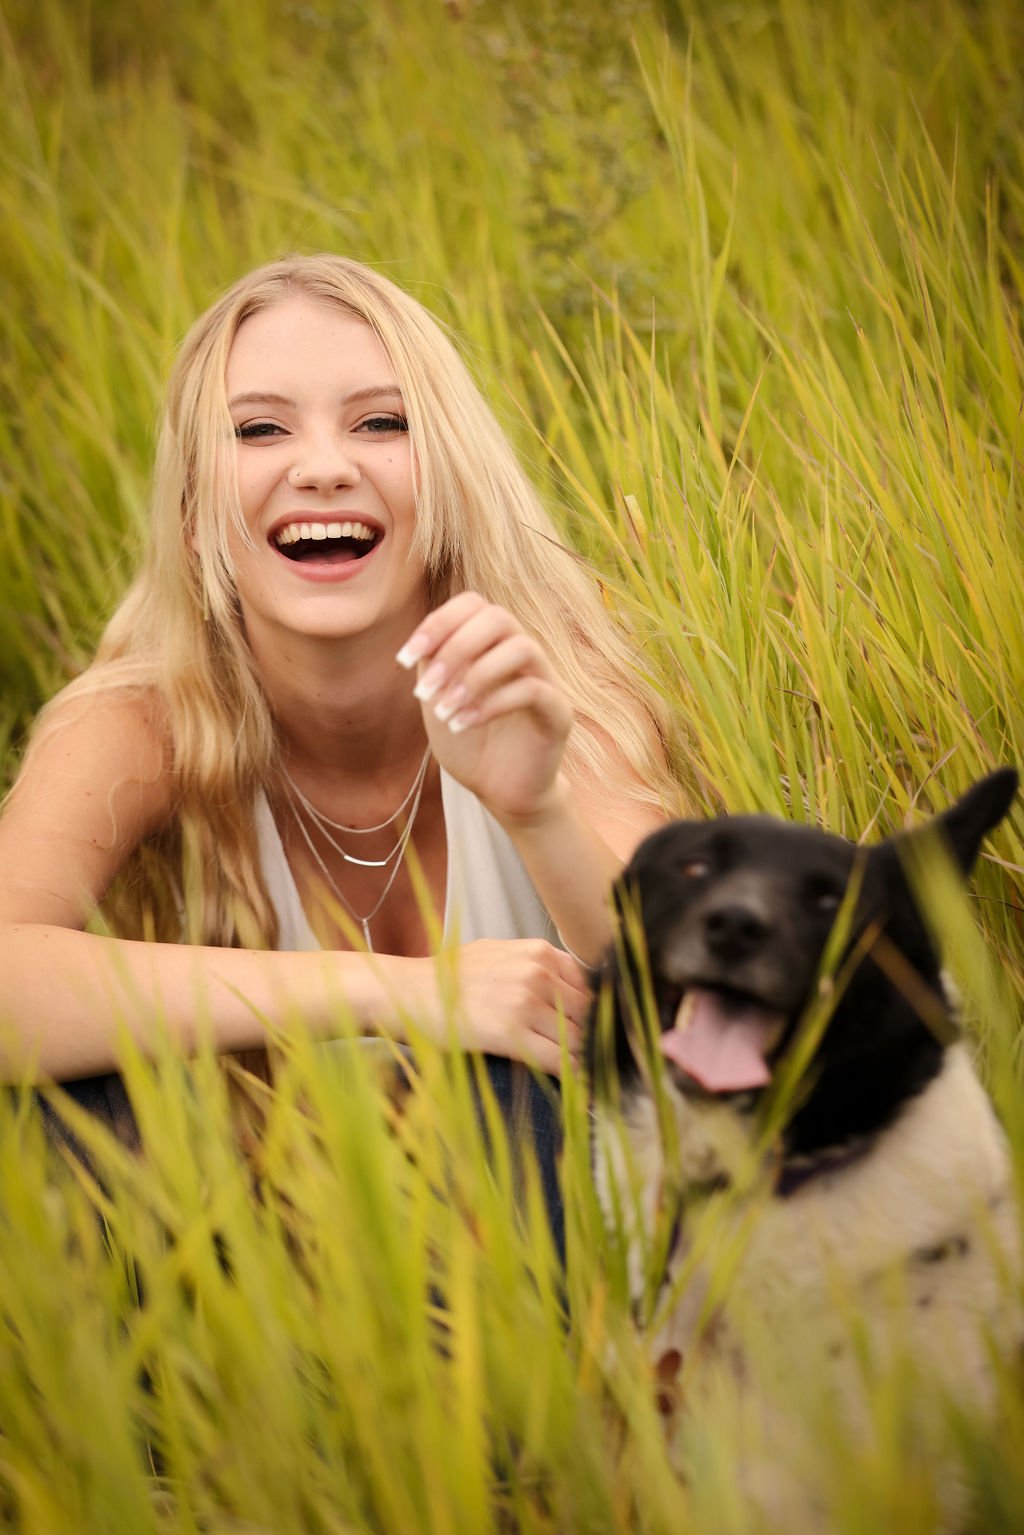 Senior girl laughing next to dog in field.jpg